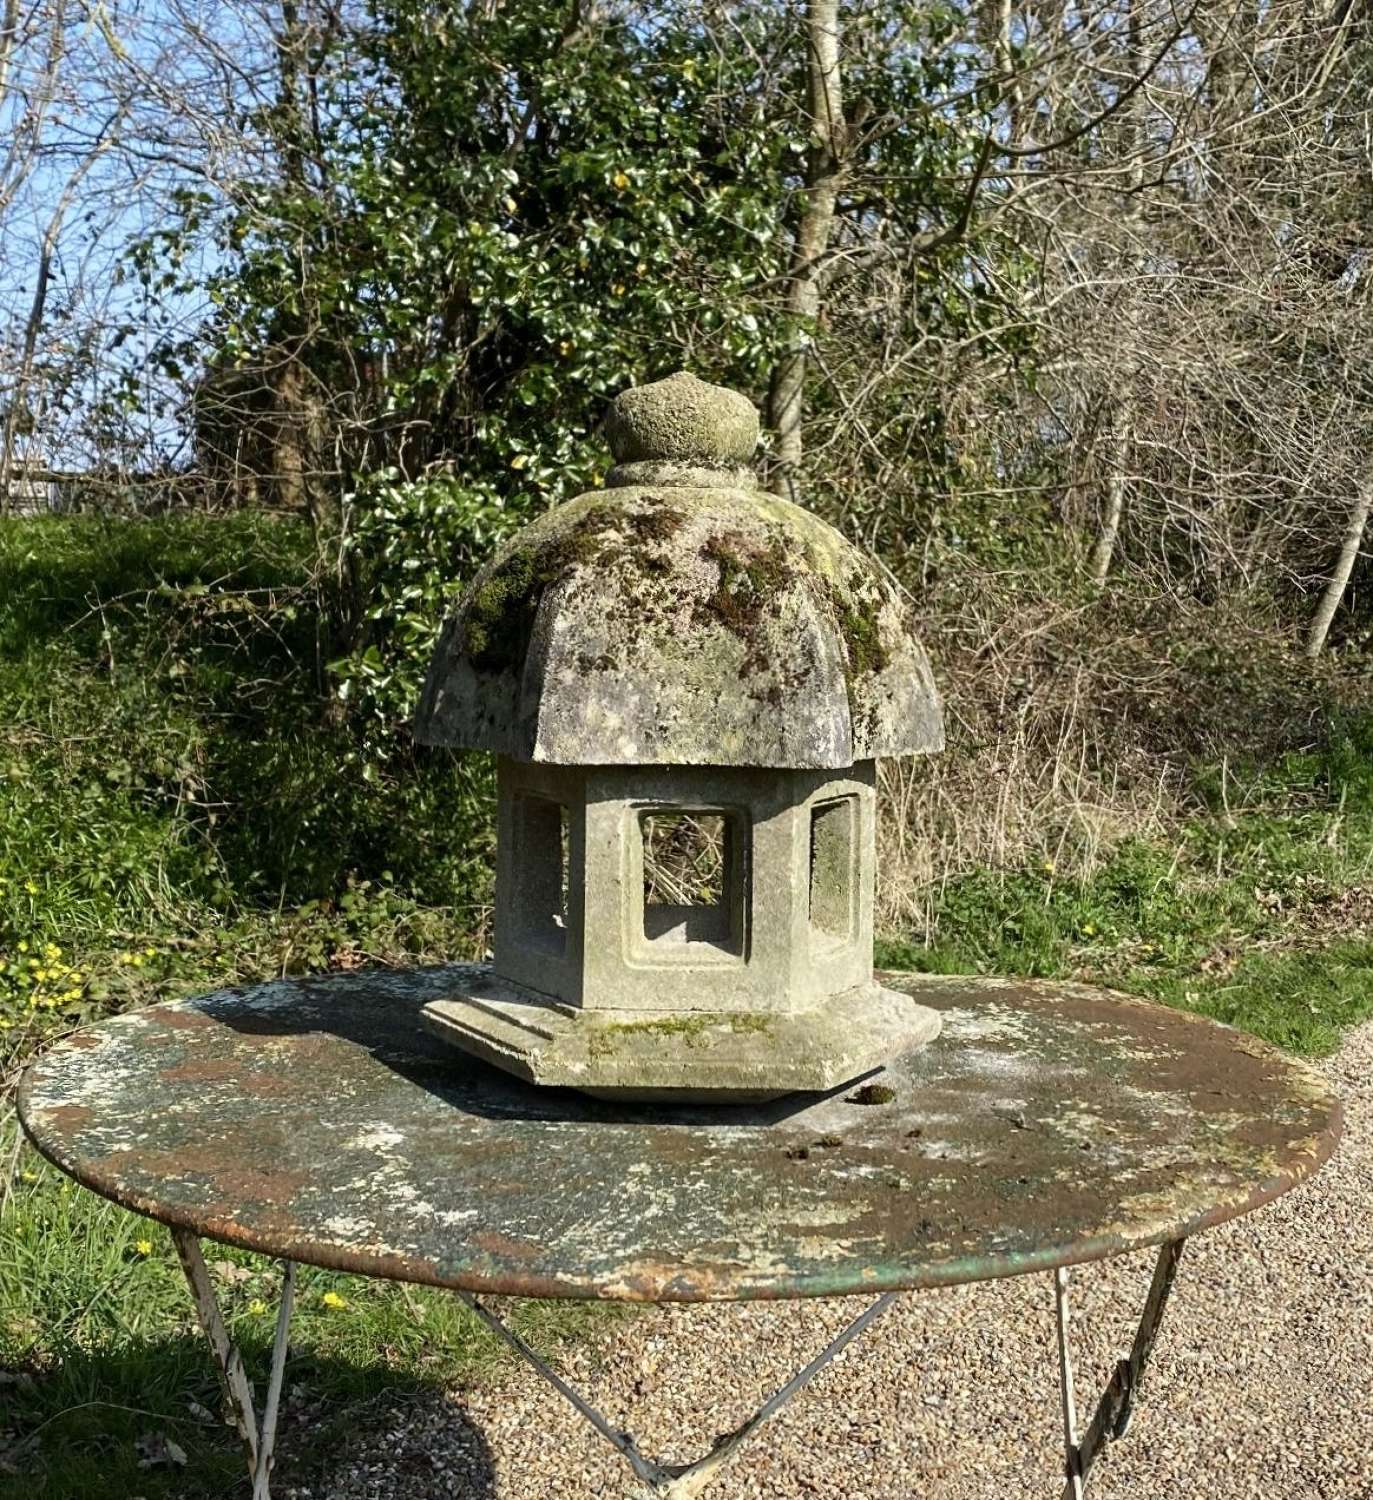 Mossy Lantern or Bird Feeder